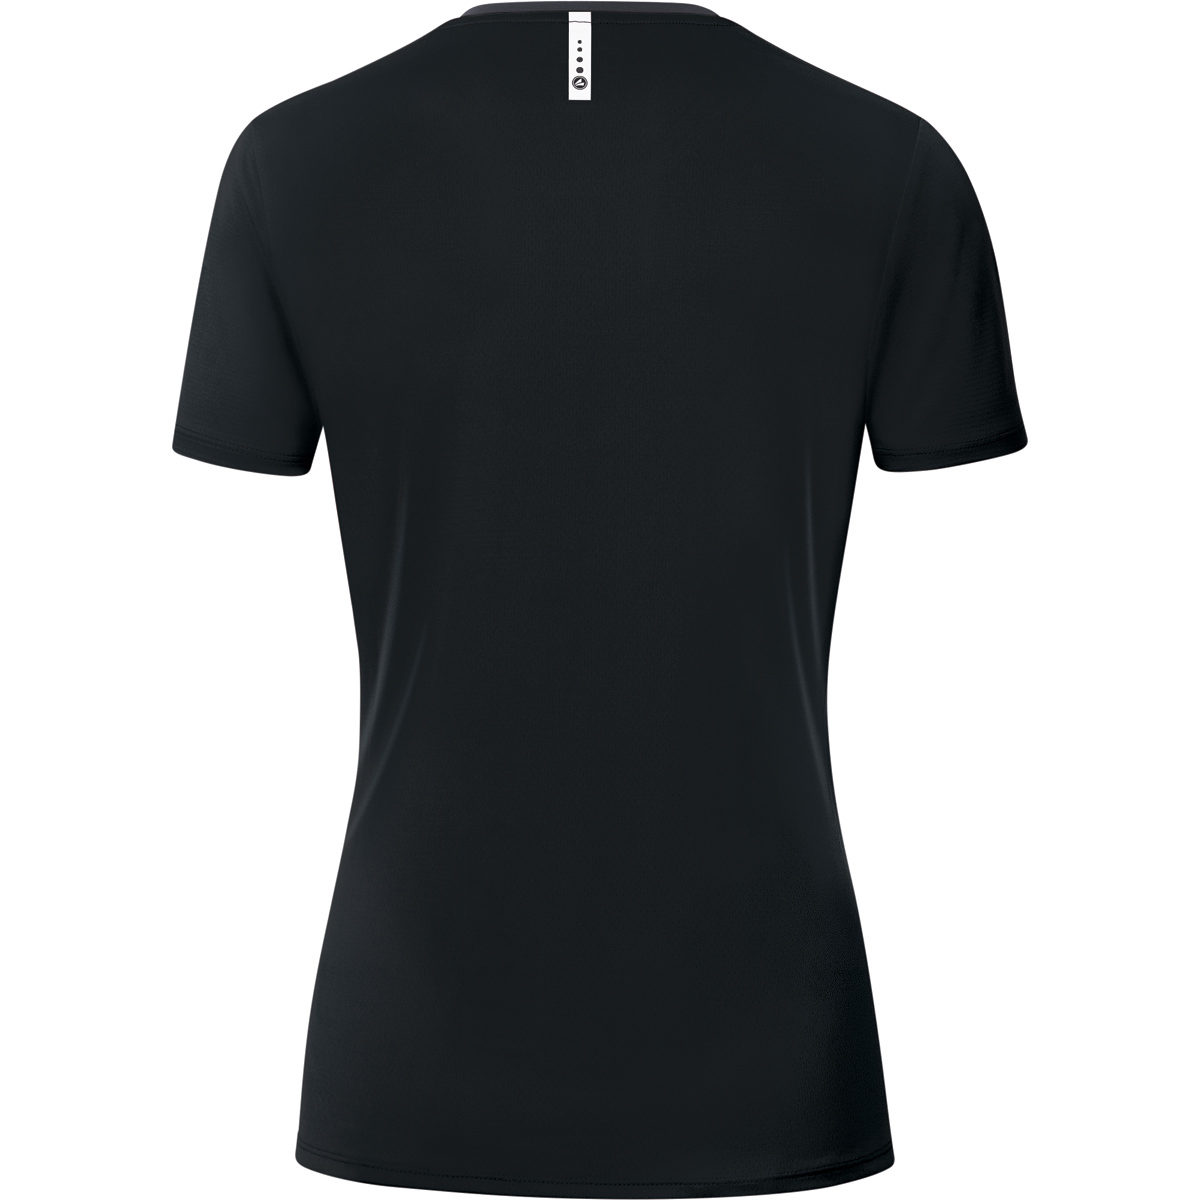 JAKO T-Shirt Damen, 2.0 schwarz/anthrazit, 6120 44, Champ Gr